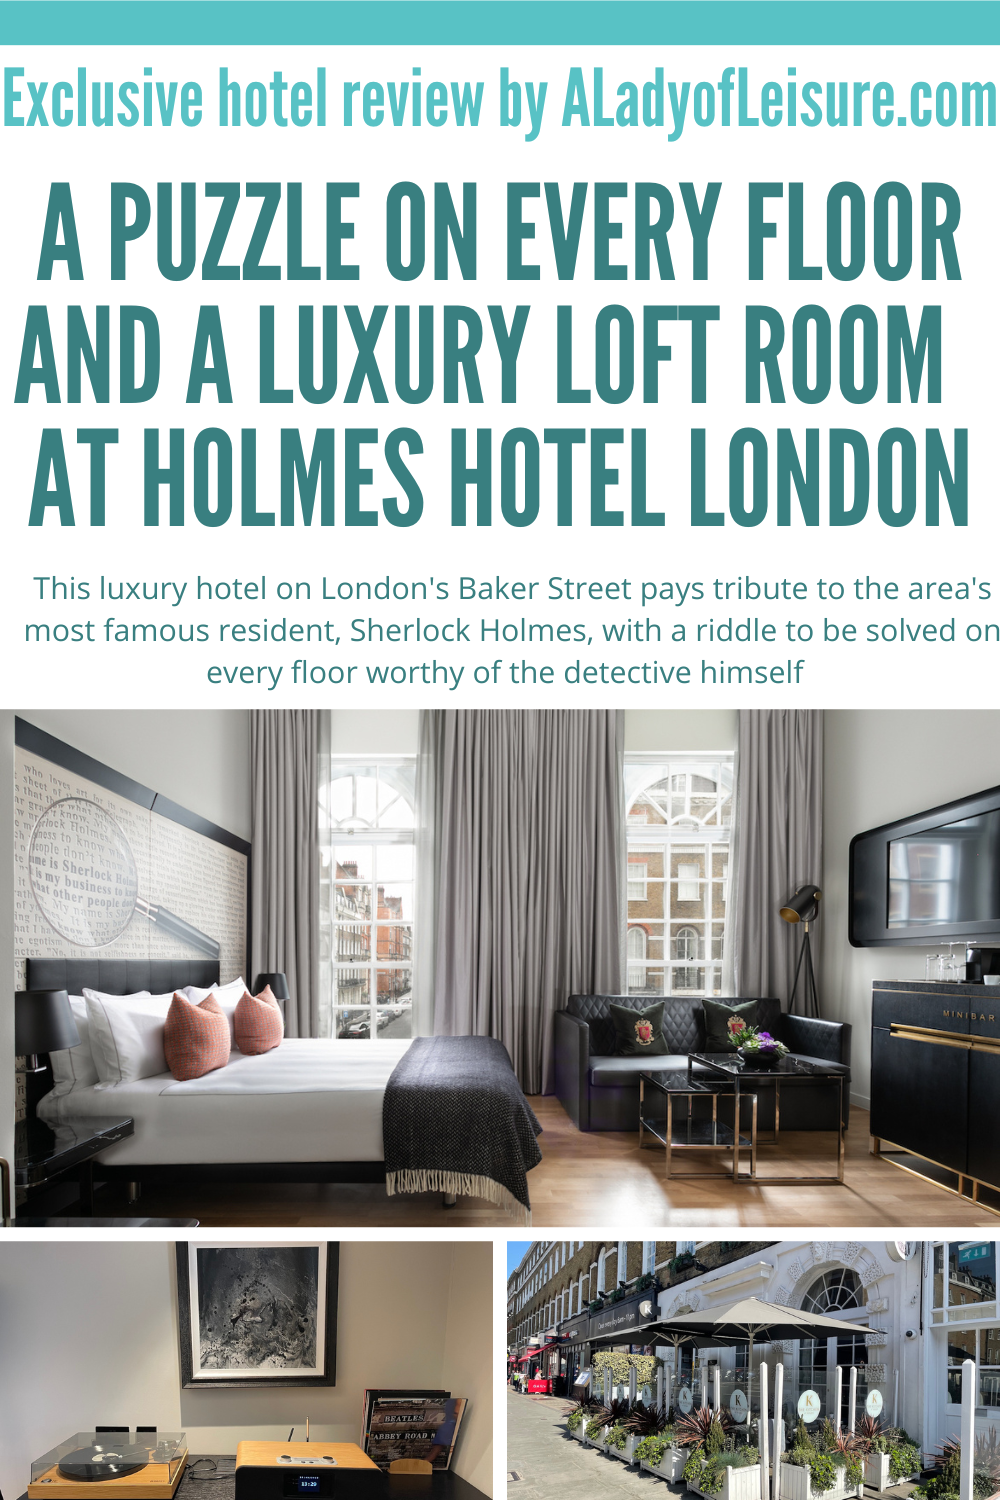 Holmes Hotel London